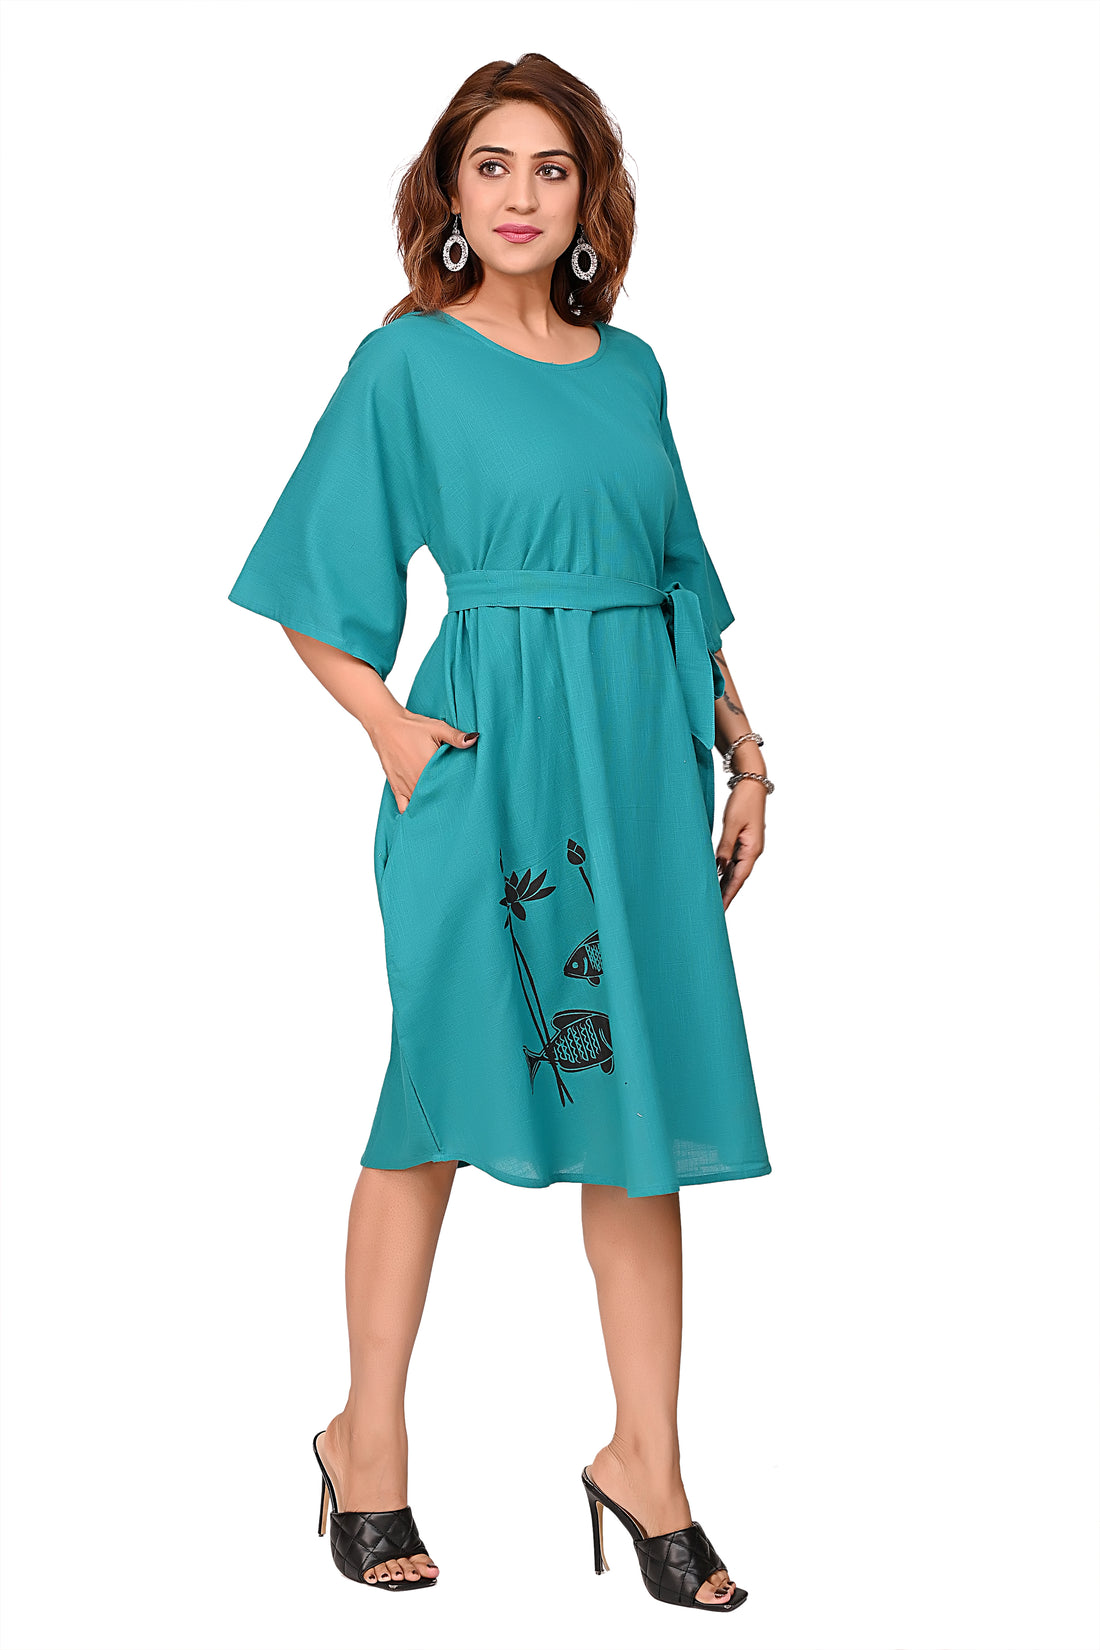 Nirmal online Premium Quality Cotton Slub Tunic Dress for Women in Teal Blue Colour